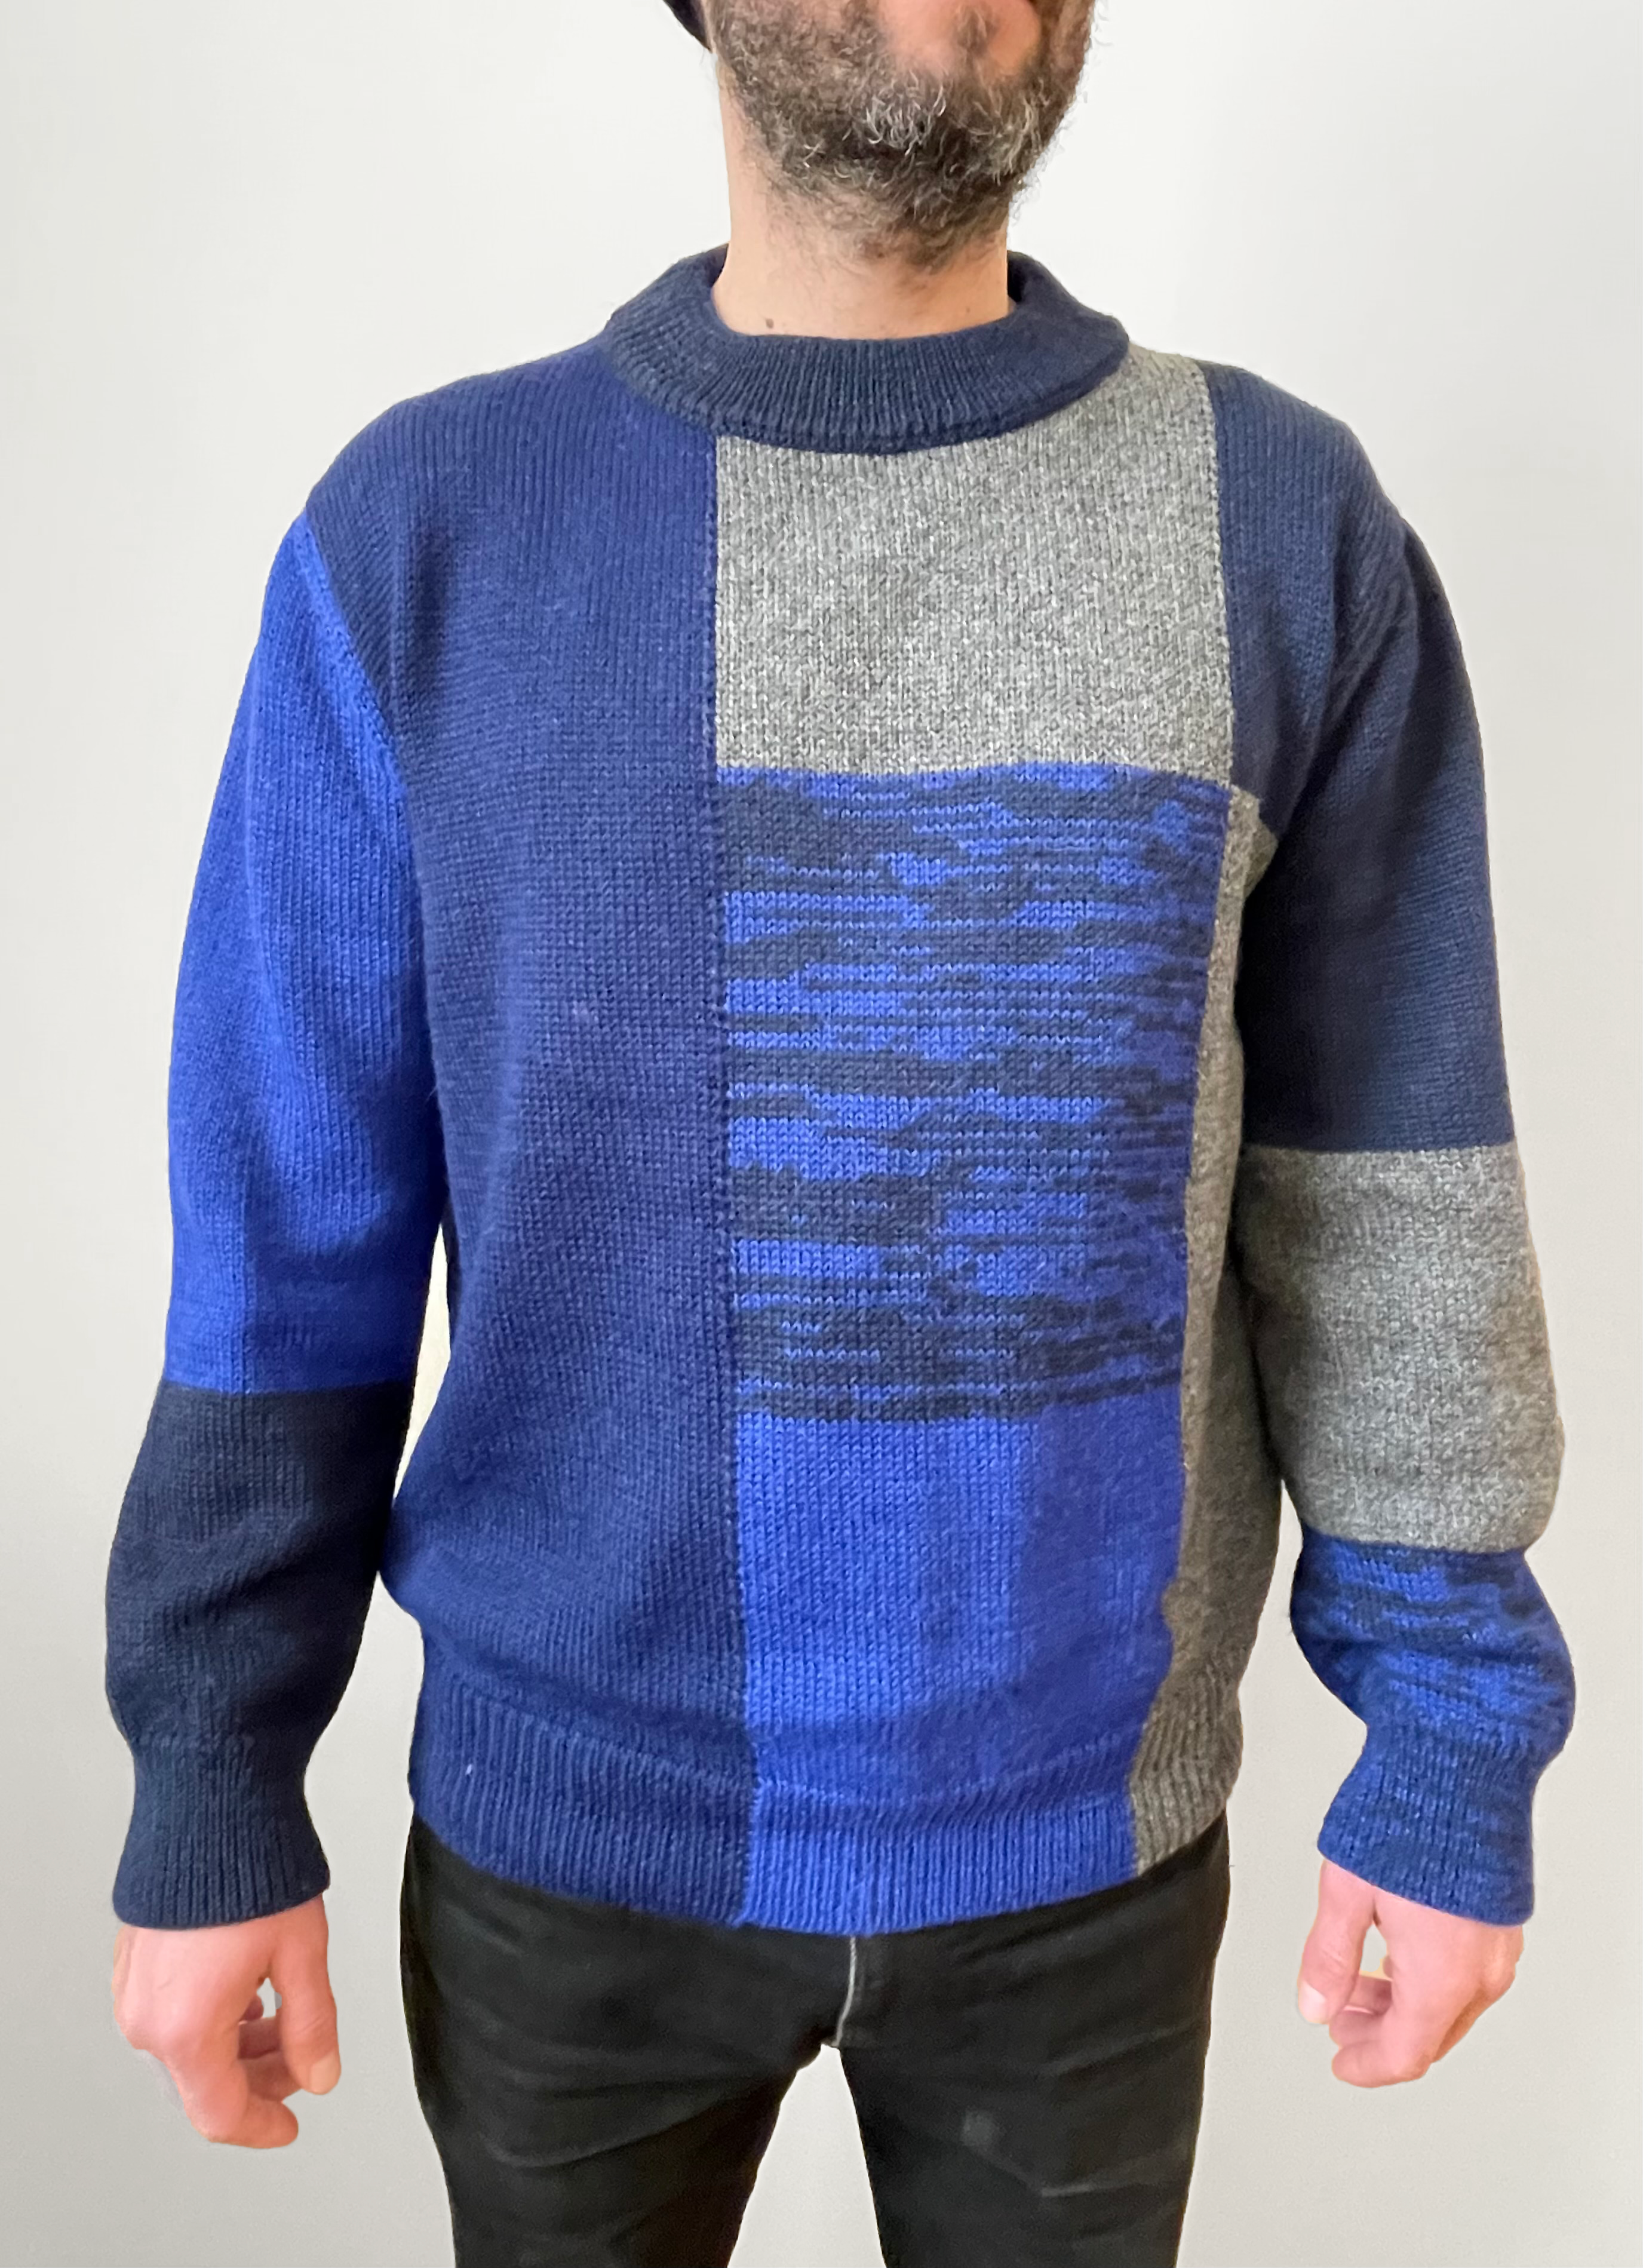 Reunion Crewneck Sweaters for Men